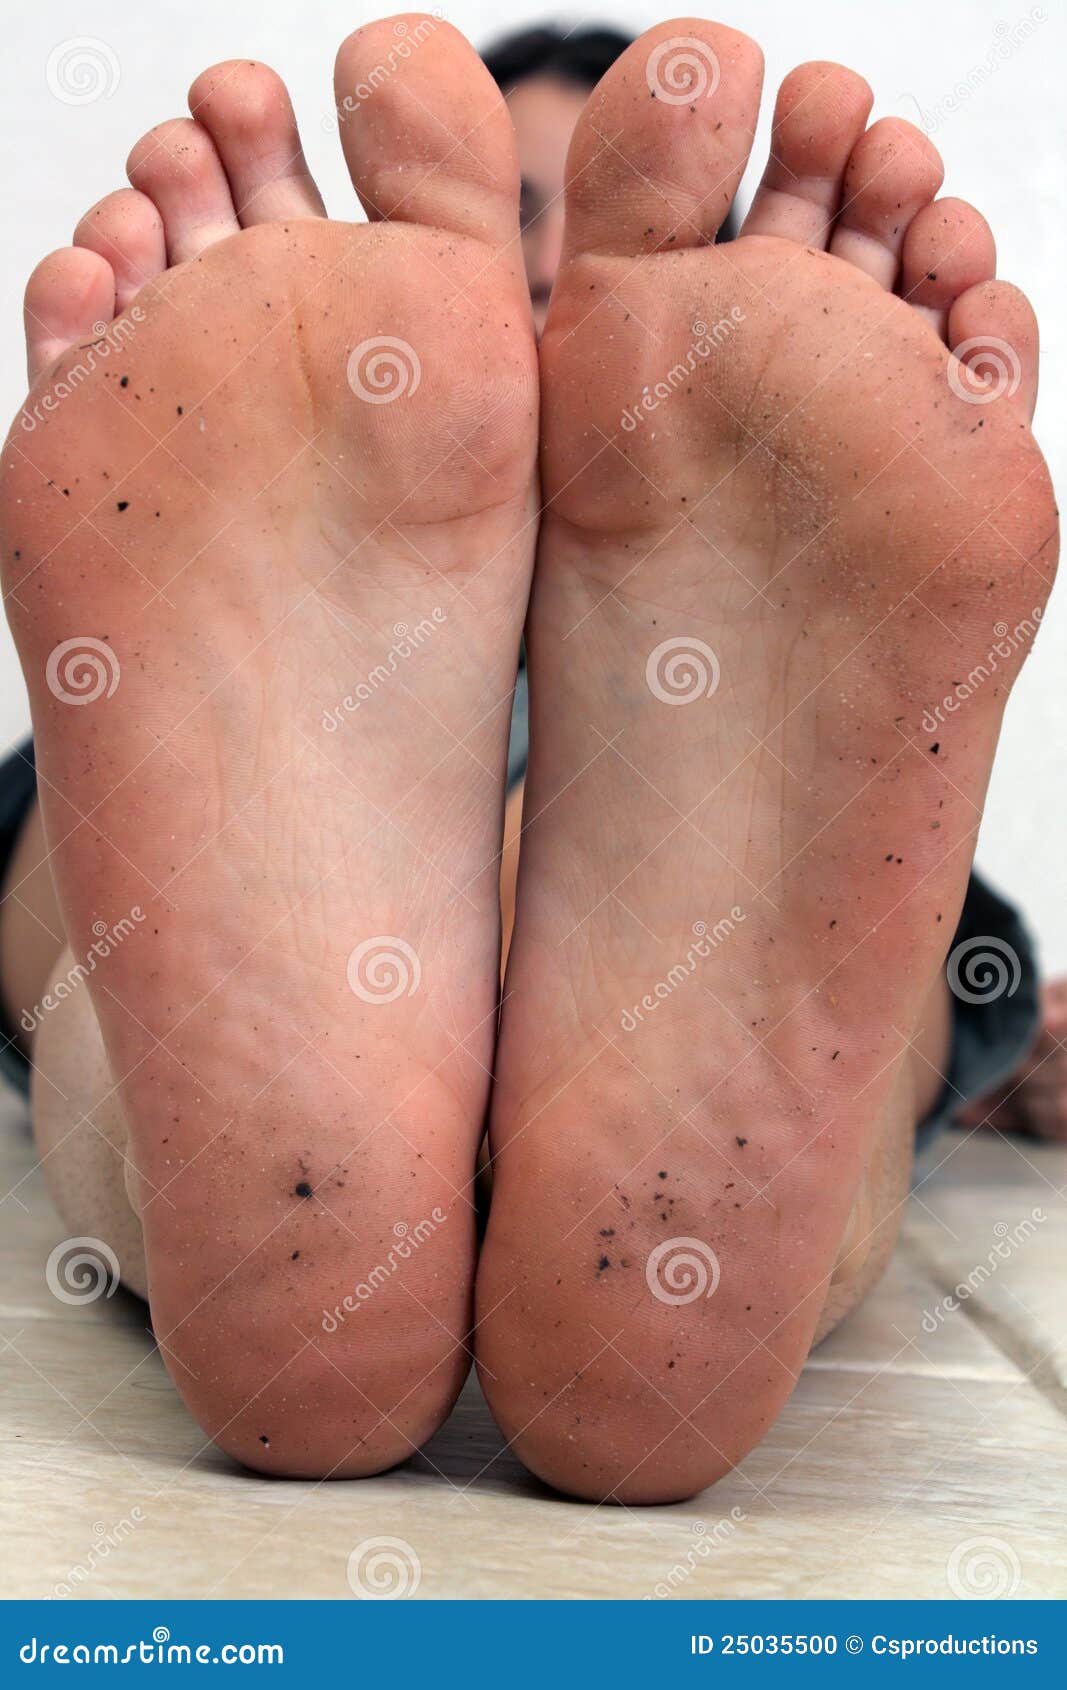 dirty feet (1)